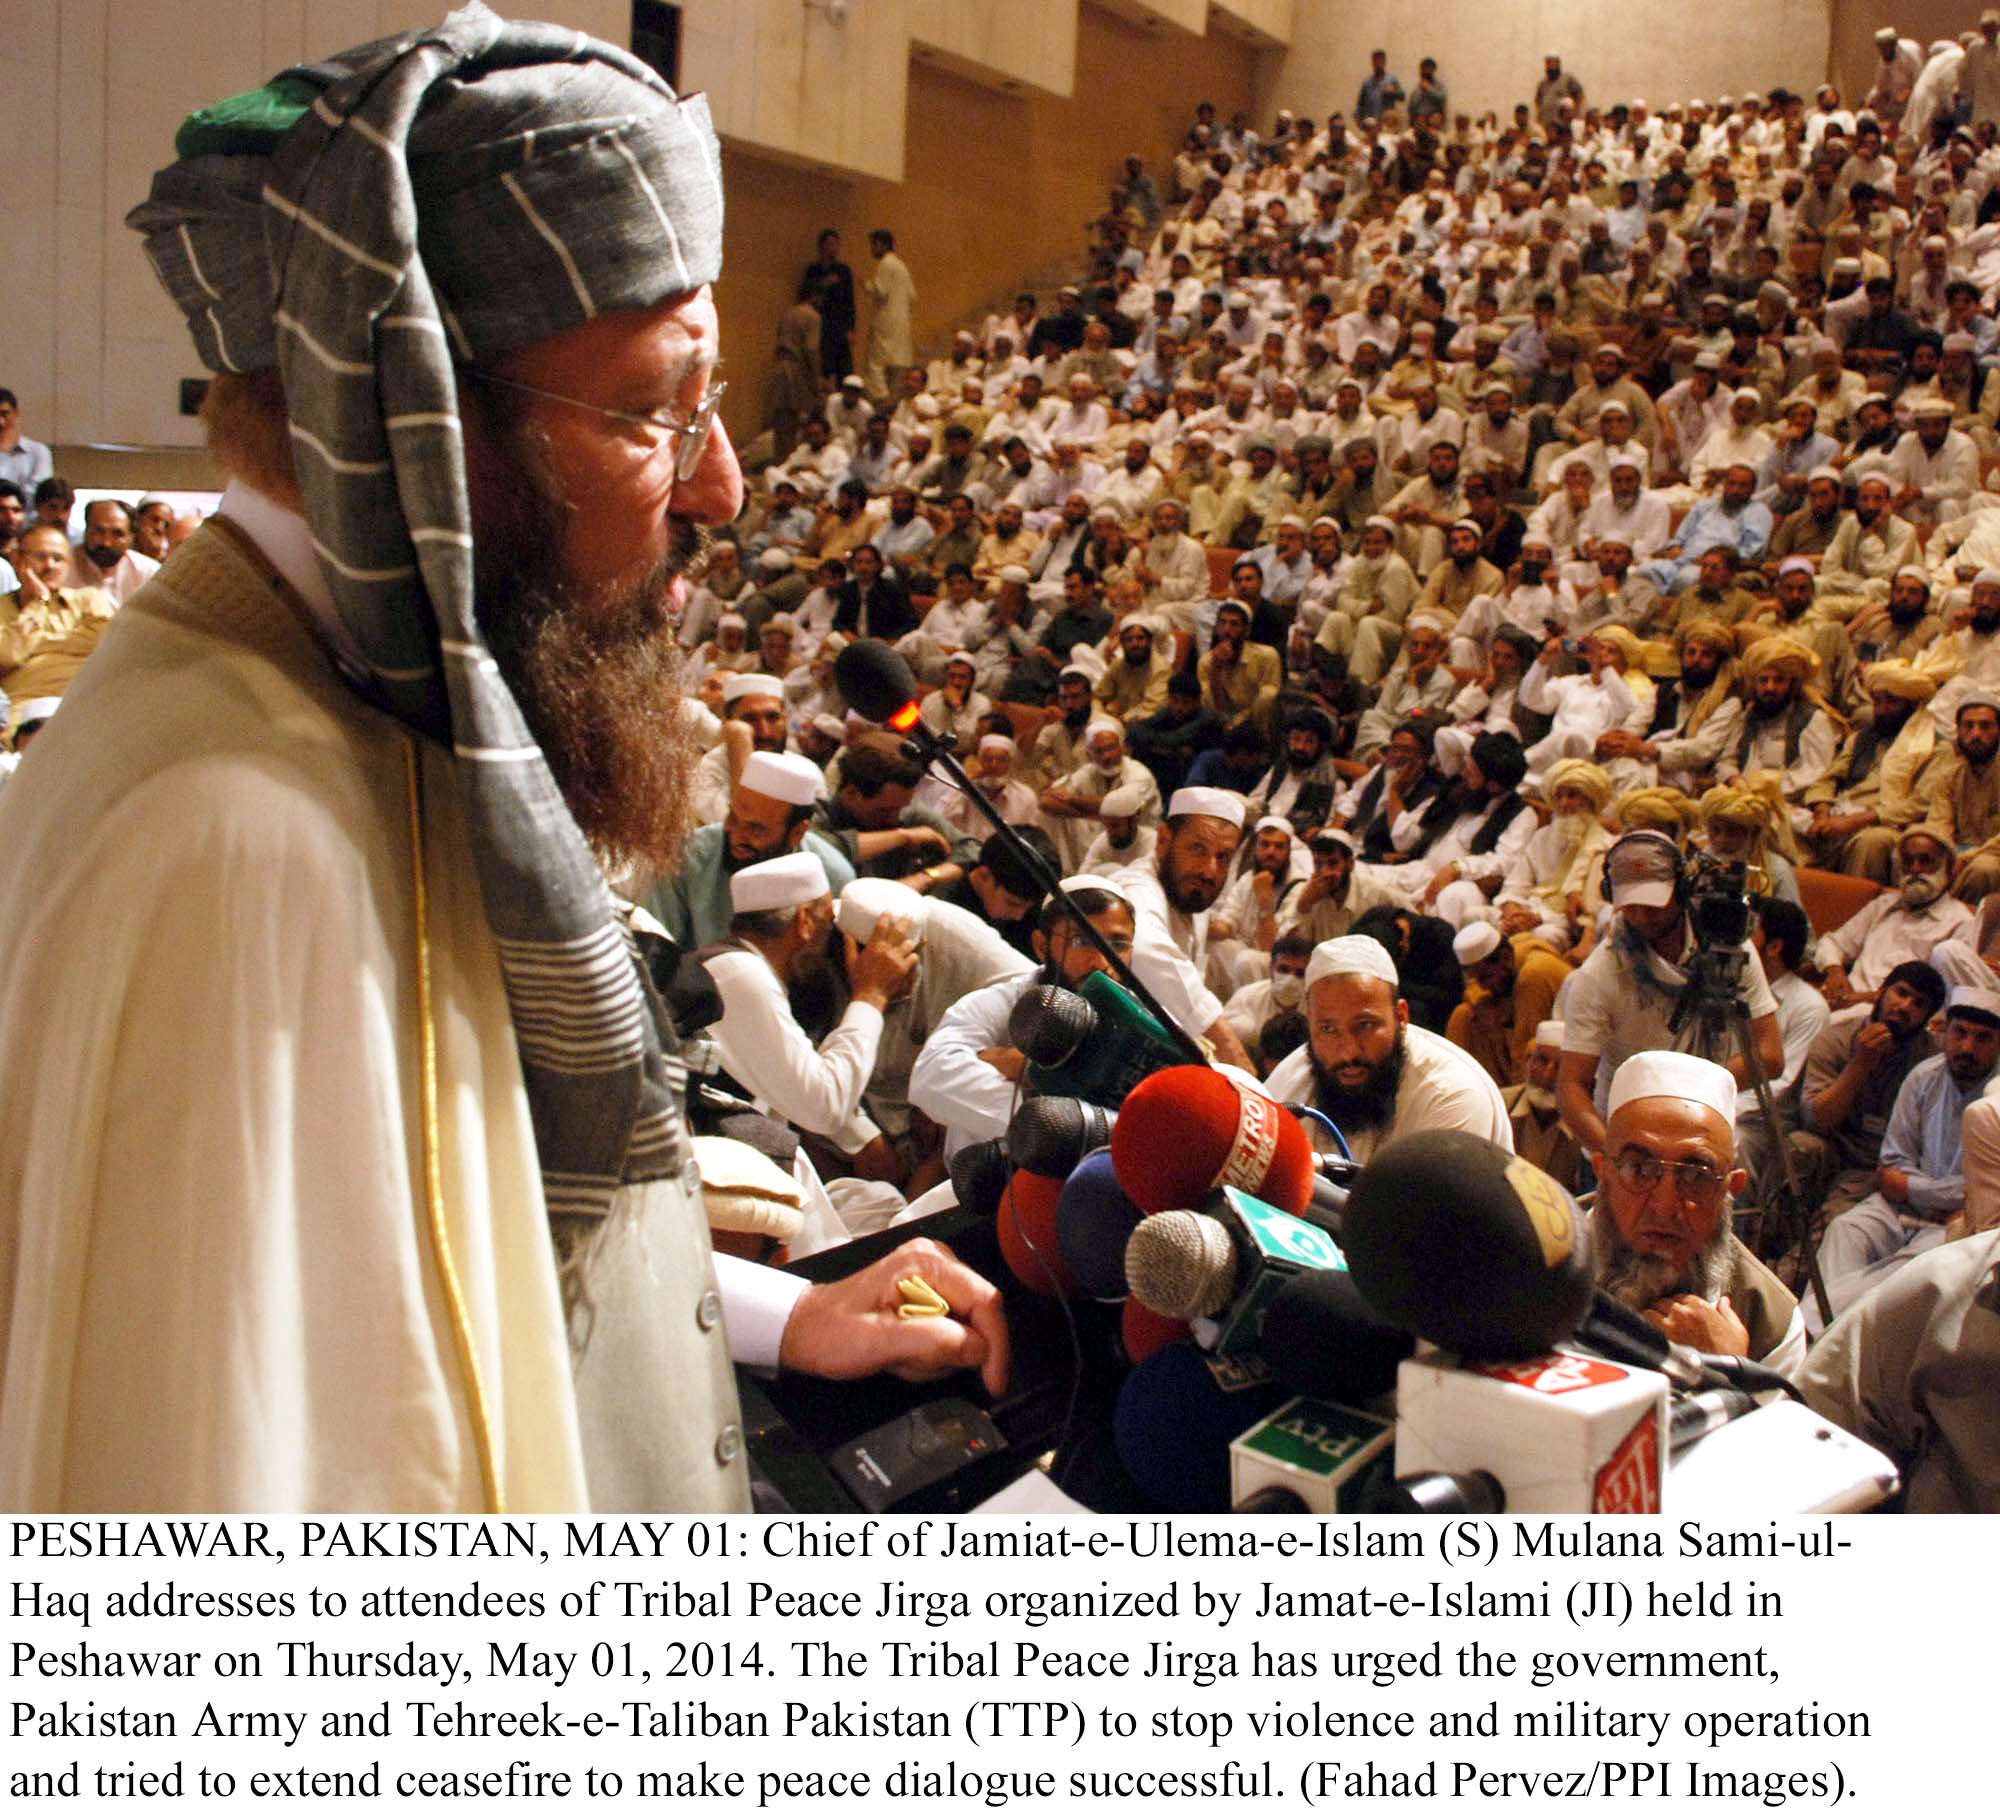 jui s chief maulana samiul haq addresses the attendees of tribal peace jirga organised by the jamat e islami ji in peshawar on may 1 2014